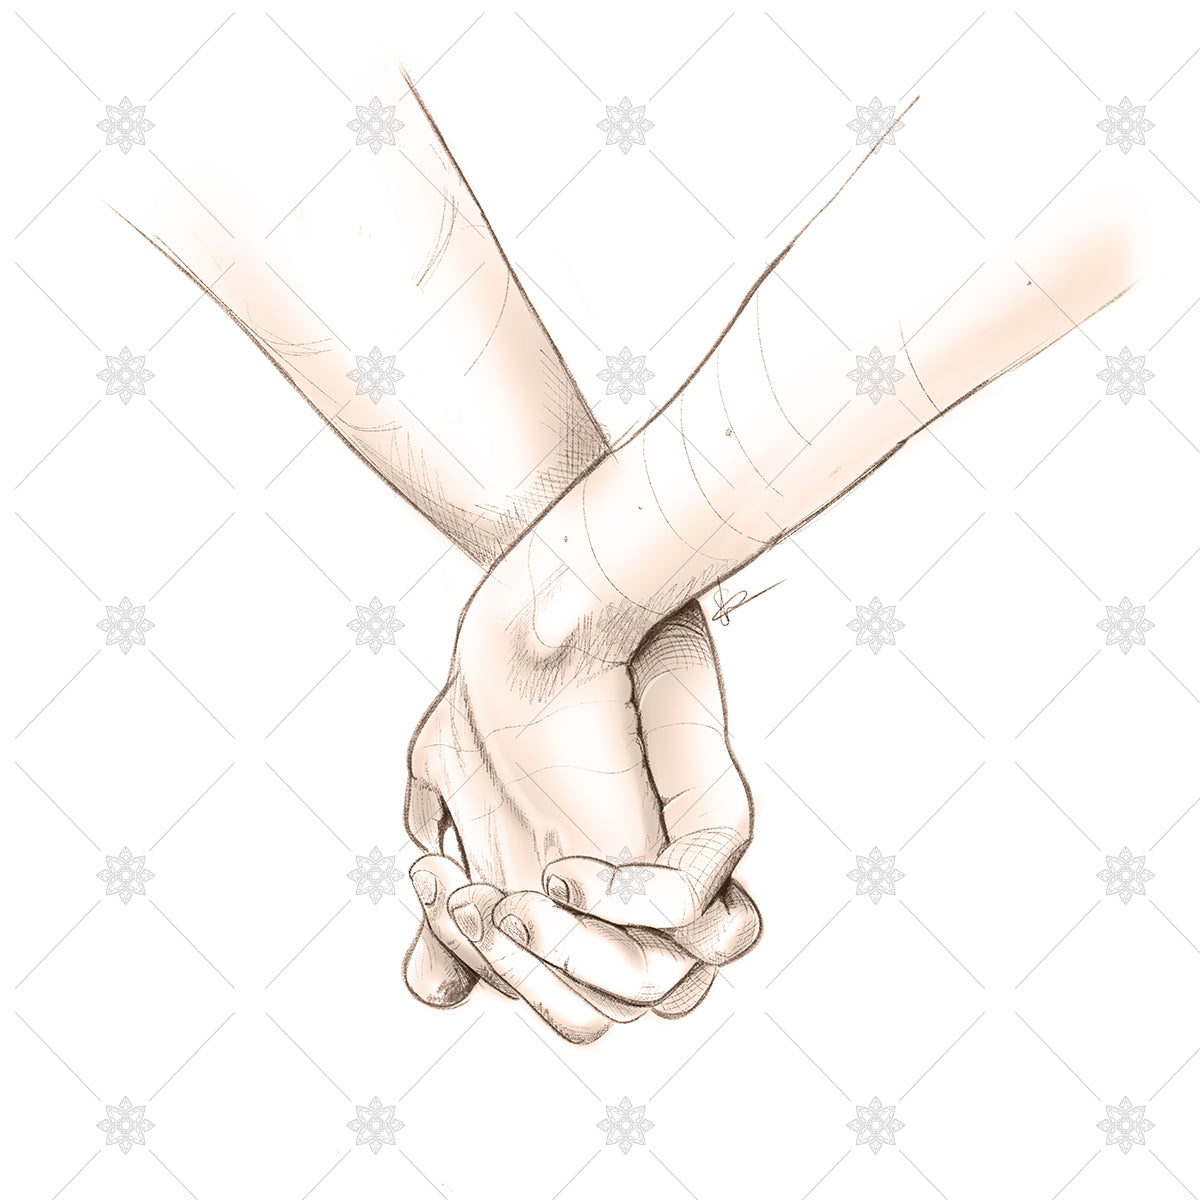 Holding hands pencil sketch - SK1034